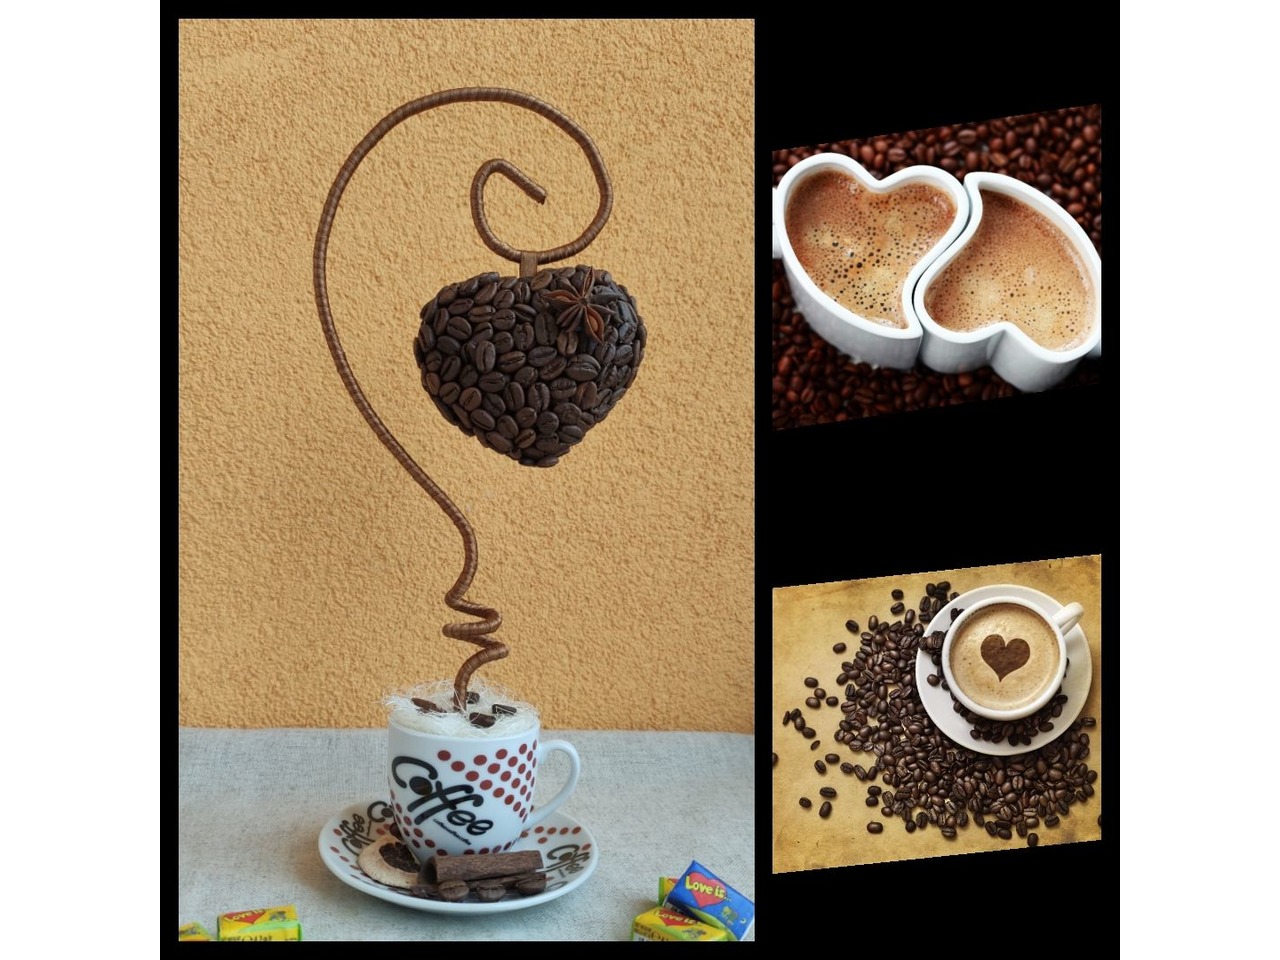 Топиарий из кофе: топиарий из кофейных зерен, кофейный топиарий